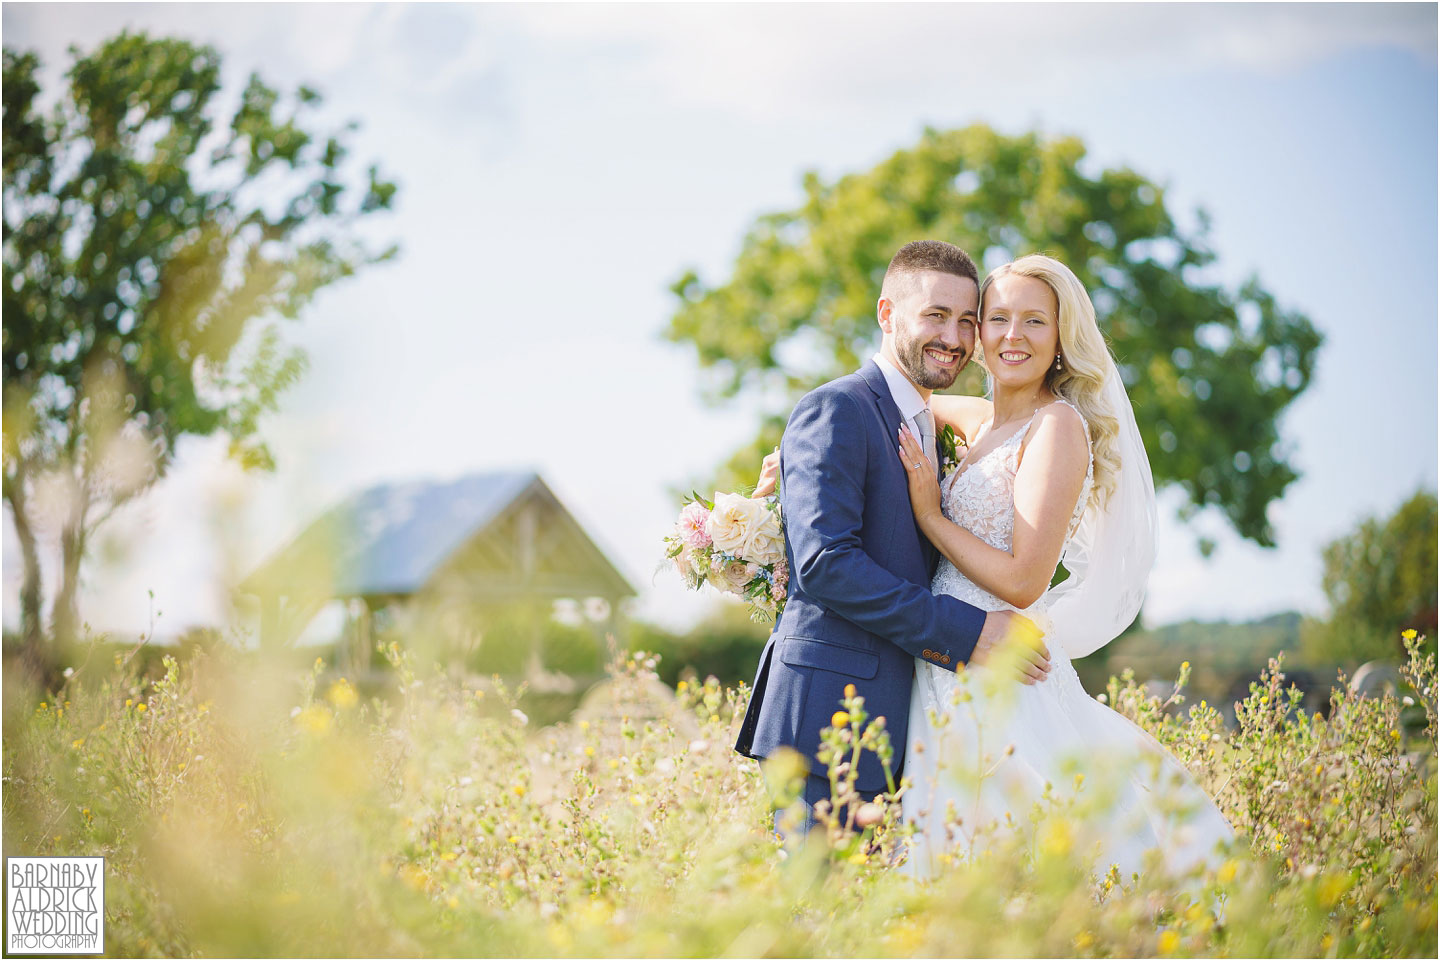 Relaxed wedding photos at Wharfedale Grange near Harrogate by Yorkshire Wedding Photographer Barnaby Aldrick